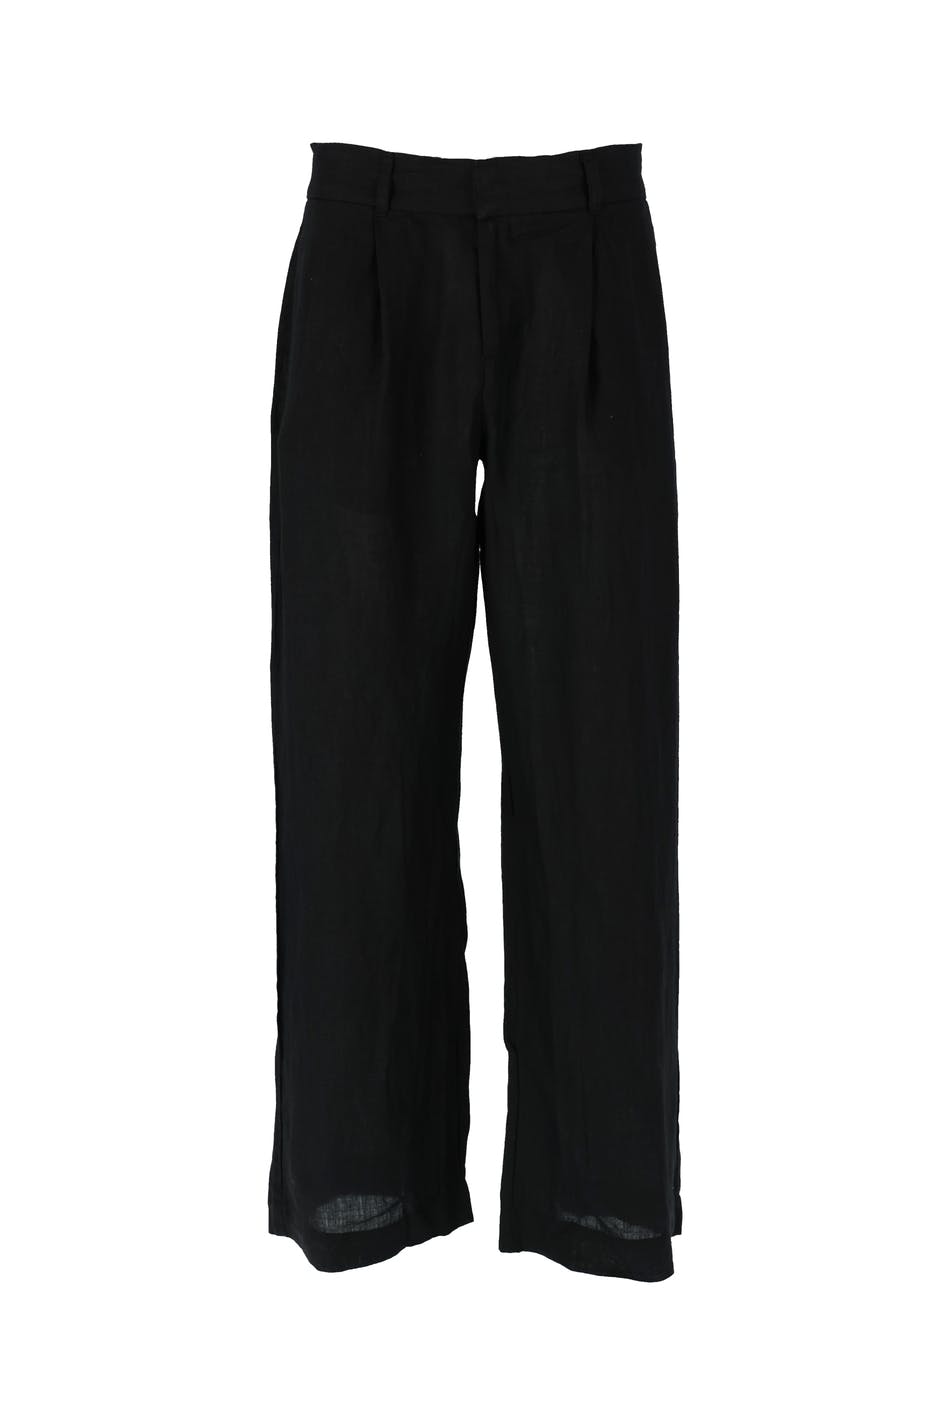 Gina Tricot - Petite linen trousers - linnebyxor - Black - L - Female